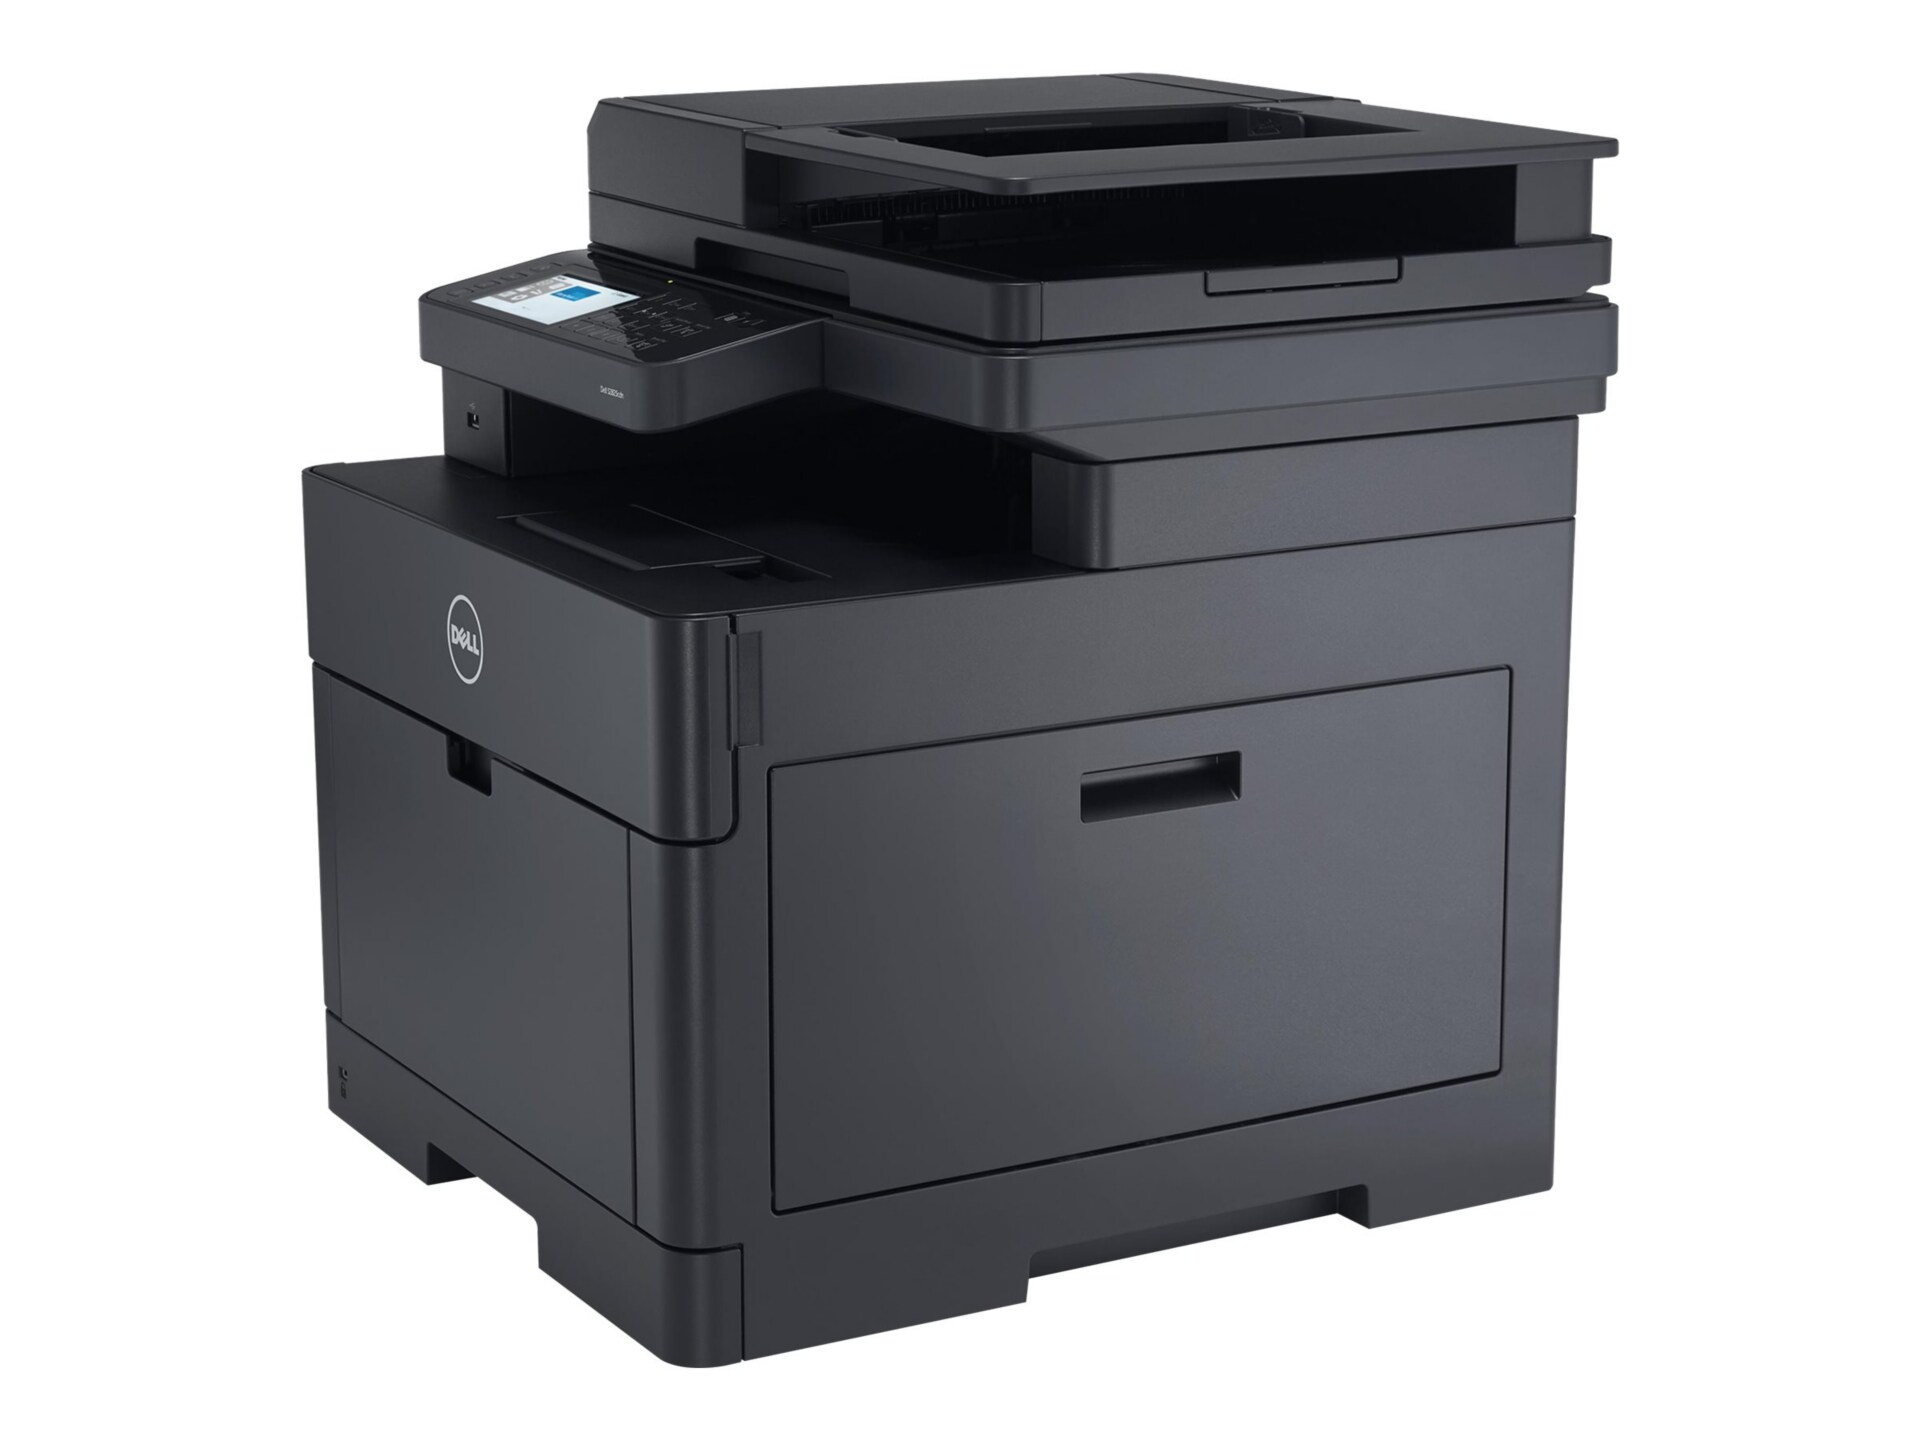 Dell Color Smart Multifunction Printer S2825cdn - multifunction printer (color)